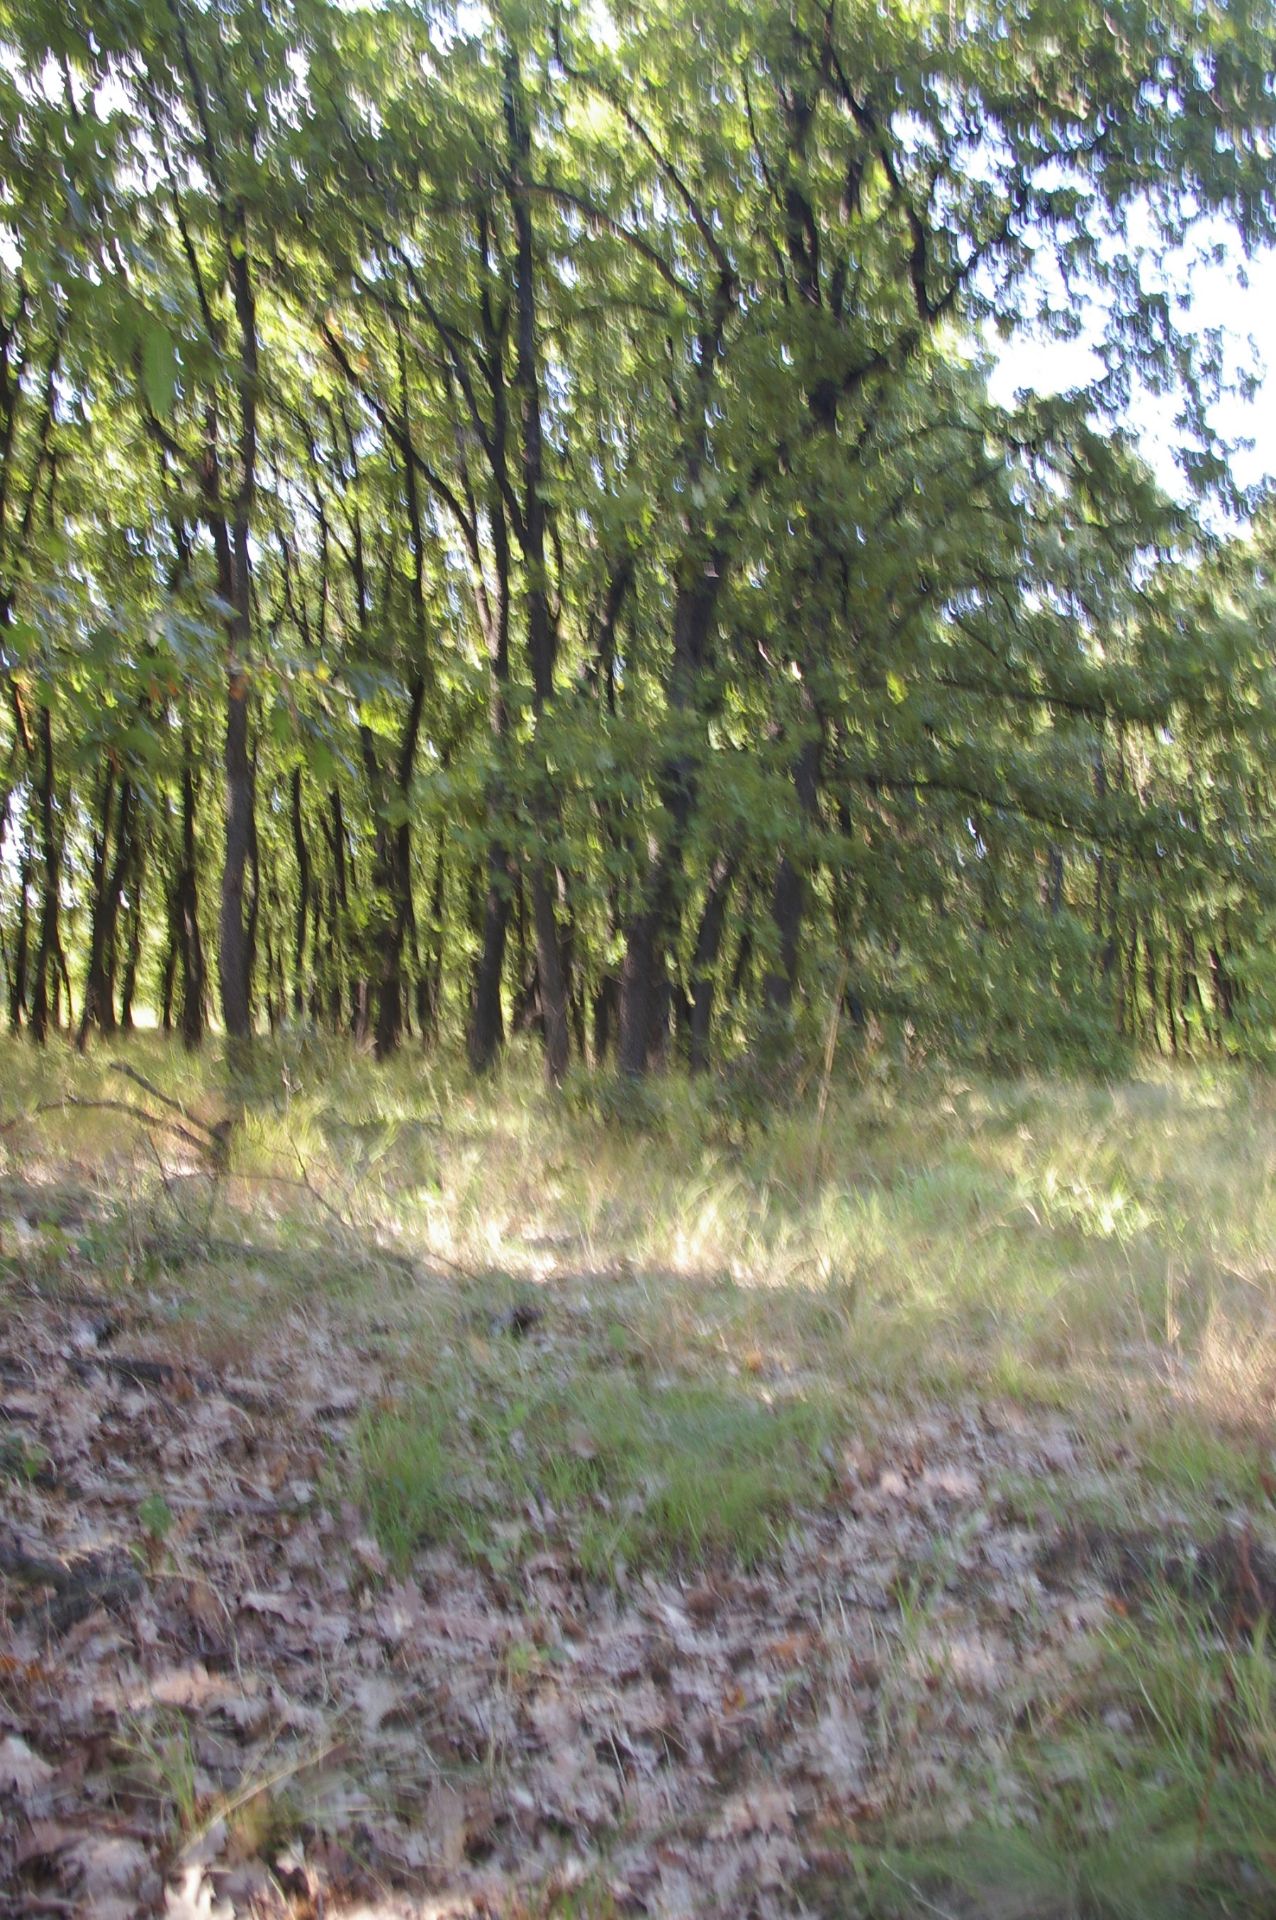 999 sqm Forest plot located in Vurtop, Vidin region, Bulgaria - Image 2 of 4